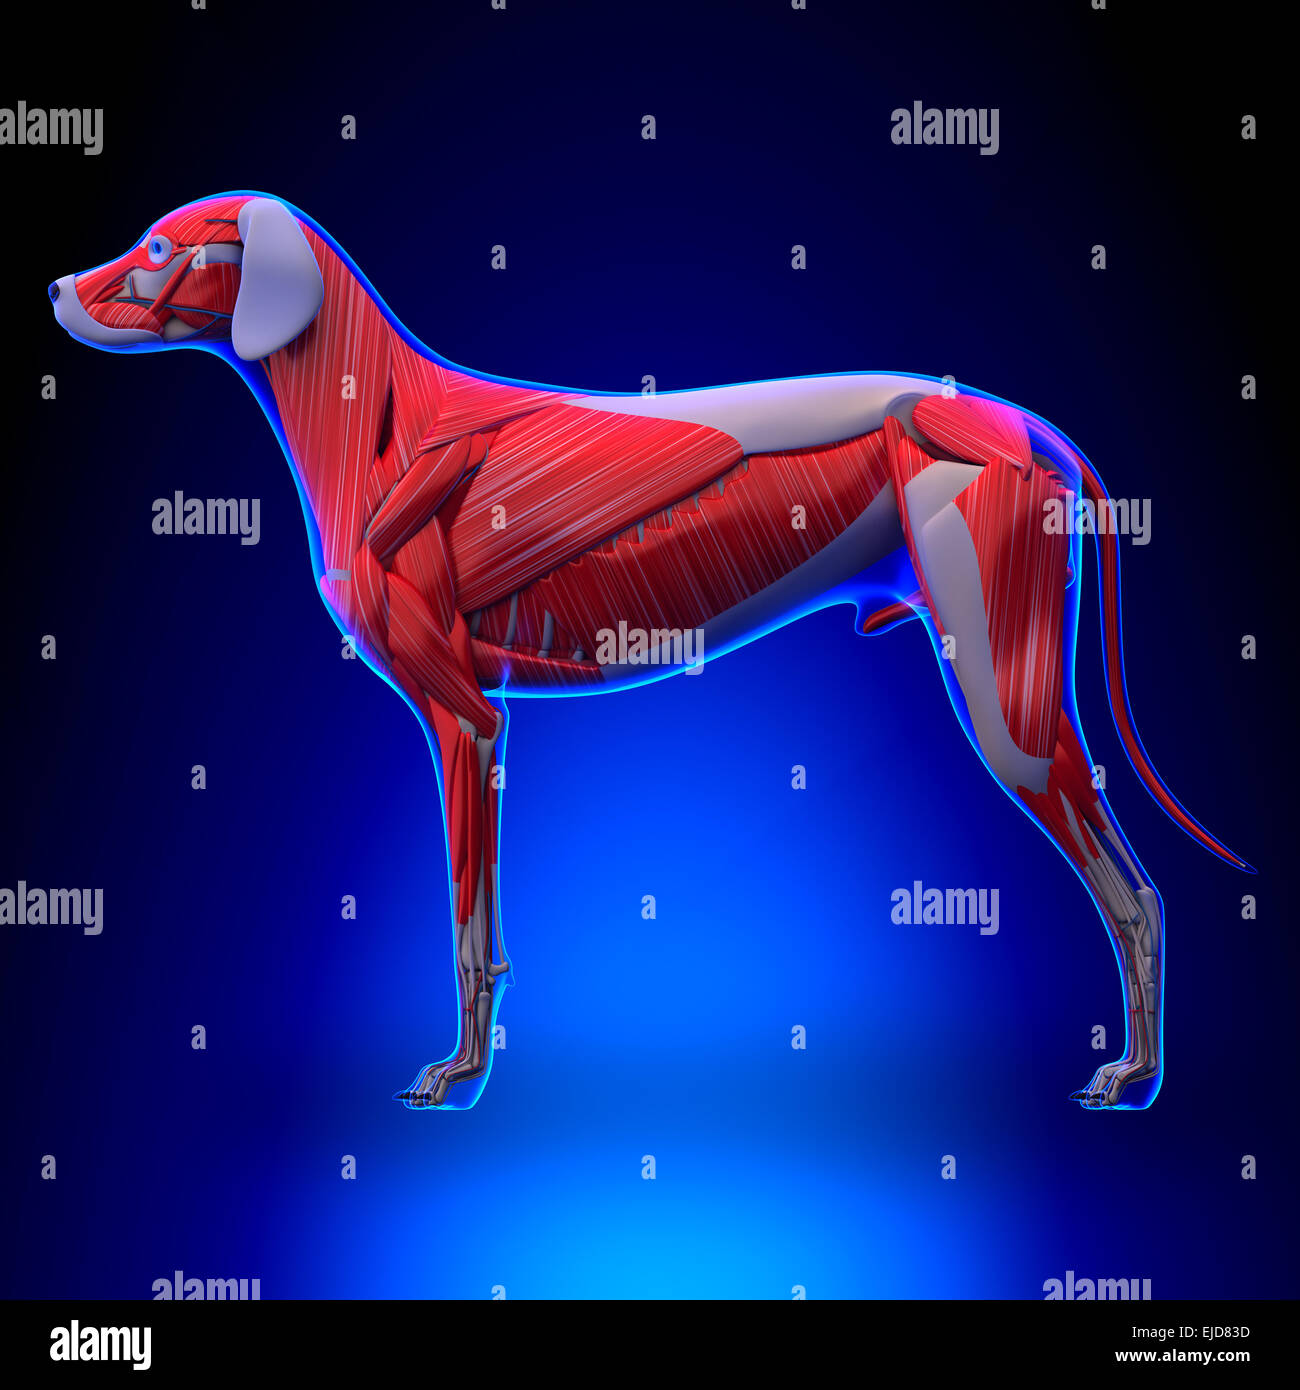 Hund Muskeln Anatomie Muskulatur des Hundes Stockfotografie Alamy